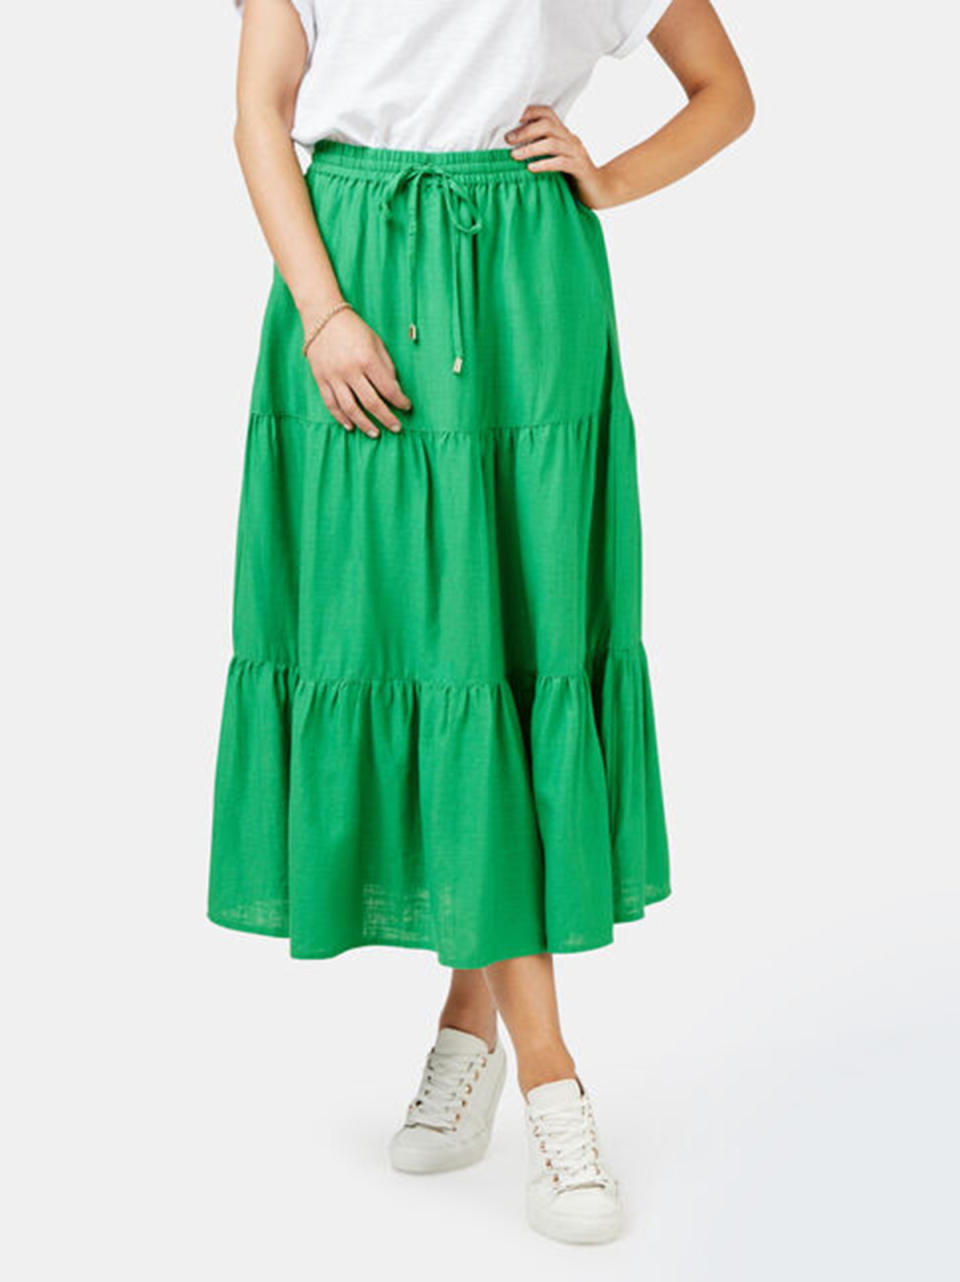 Jeanswest Alexandra Tiered Skirt, $41.99. Photo: Jeanswest.